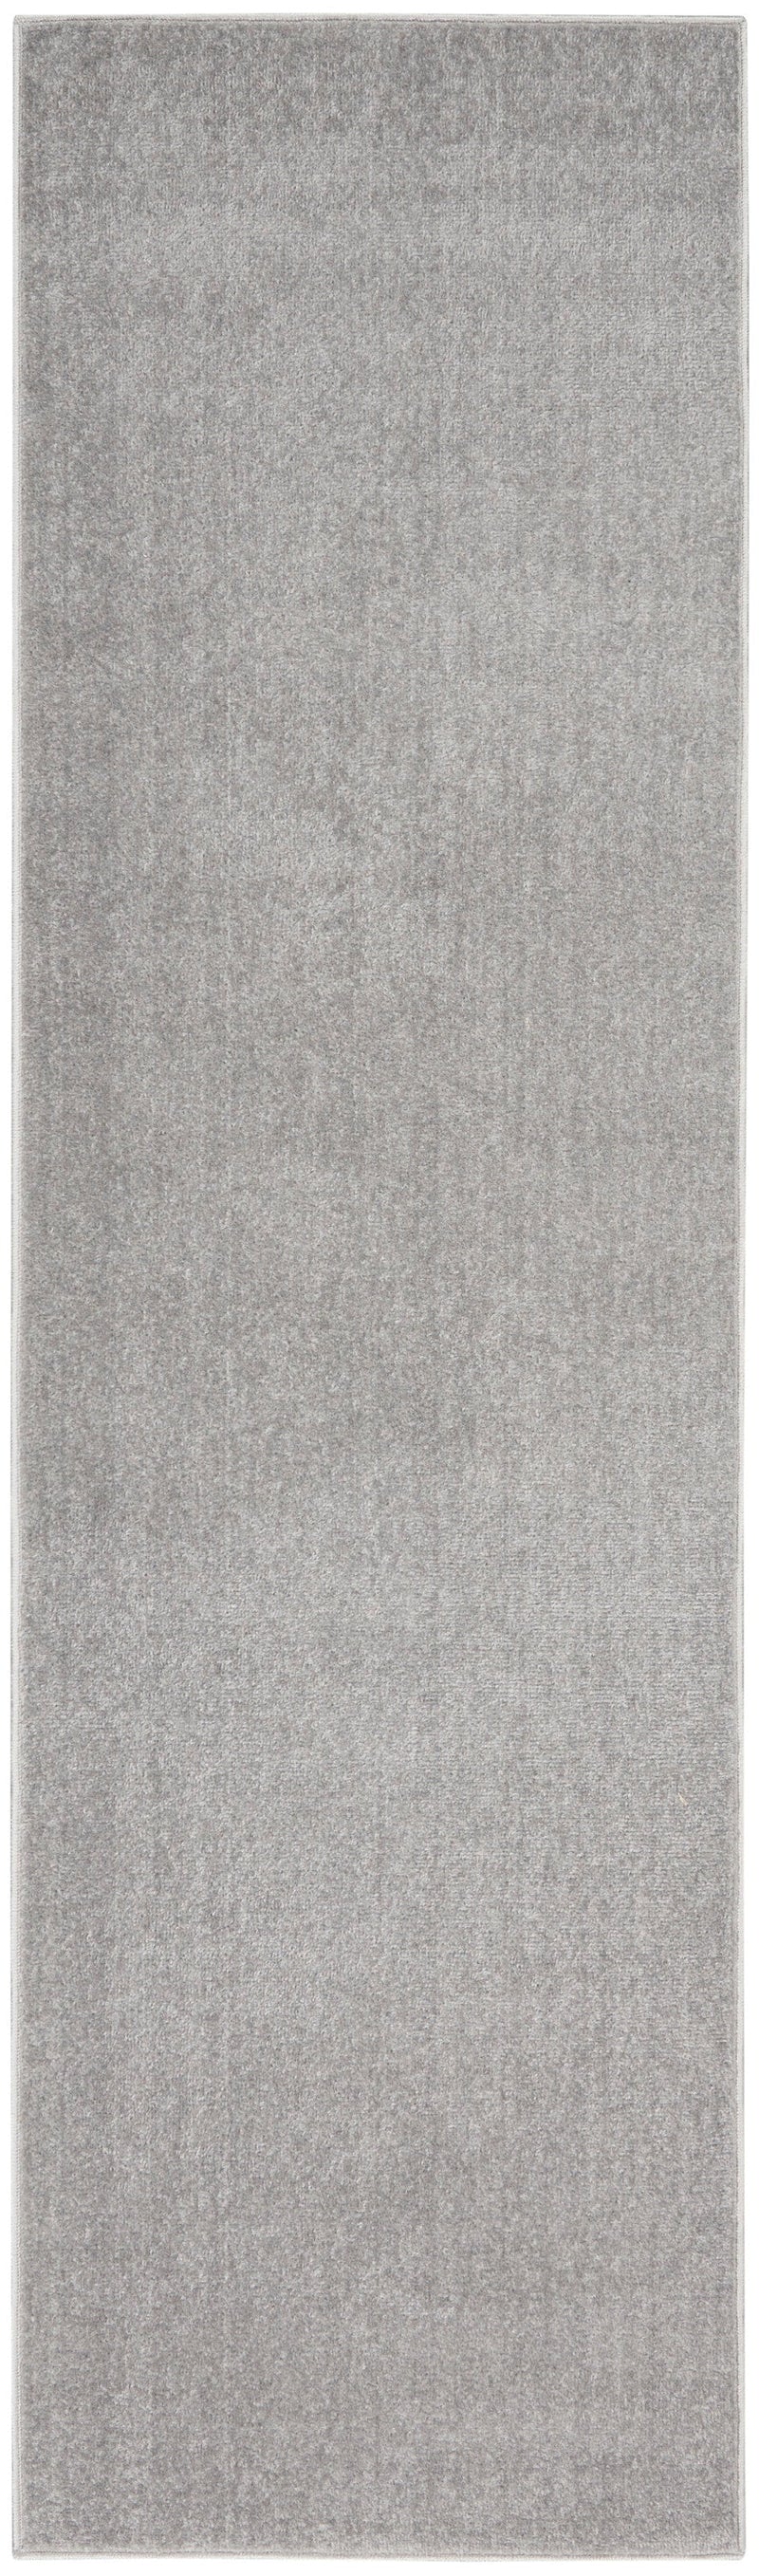 media image for nourison essentials silver grey rug by nourison 99446062369 redo 4 217